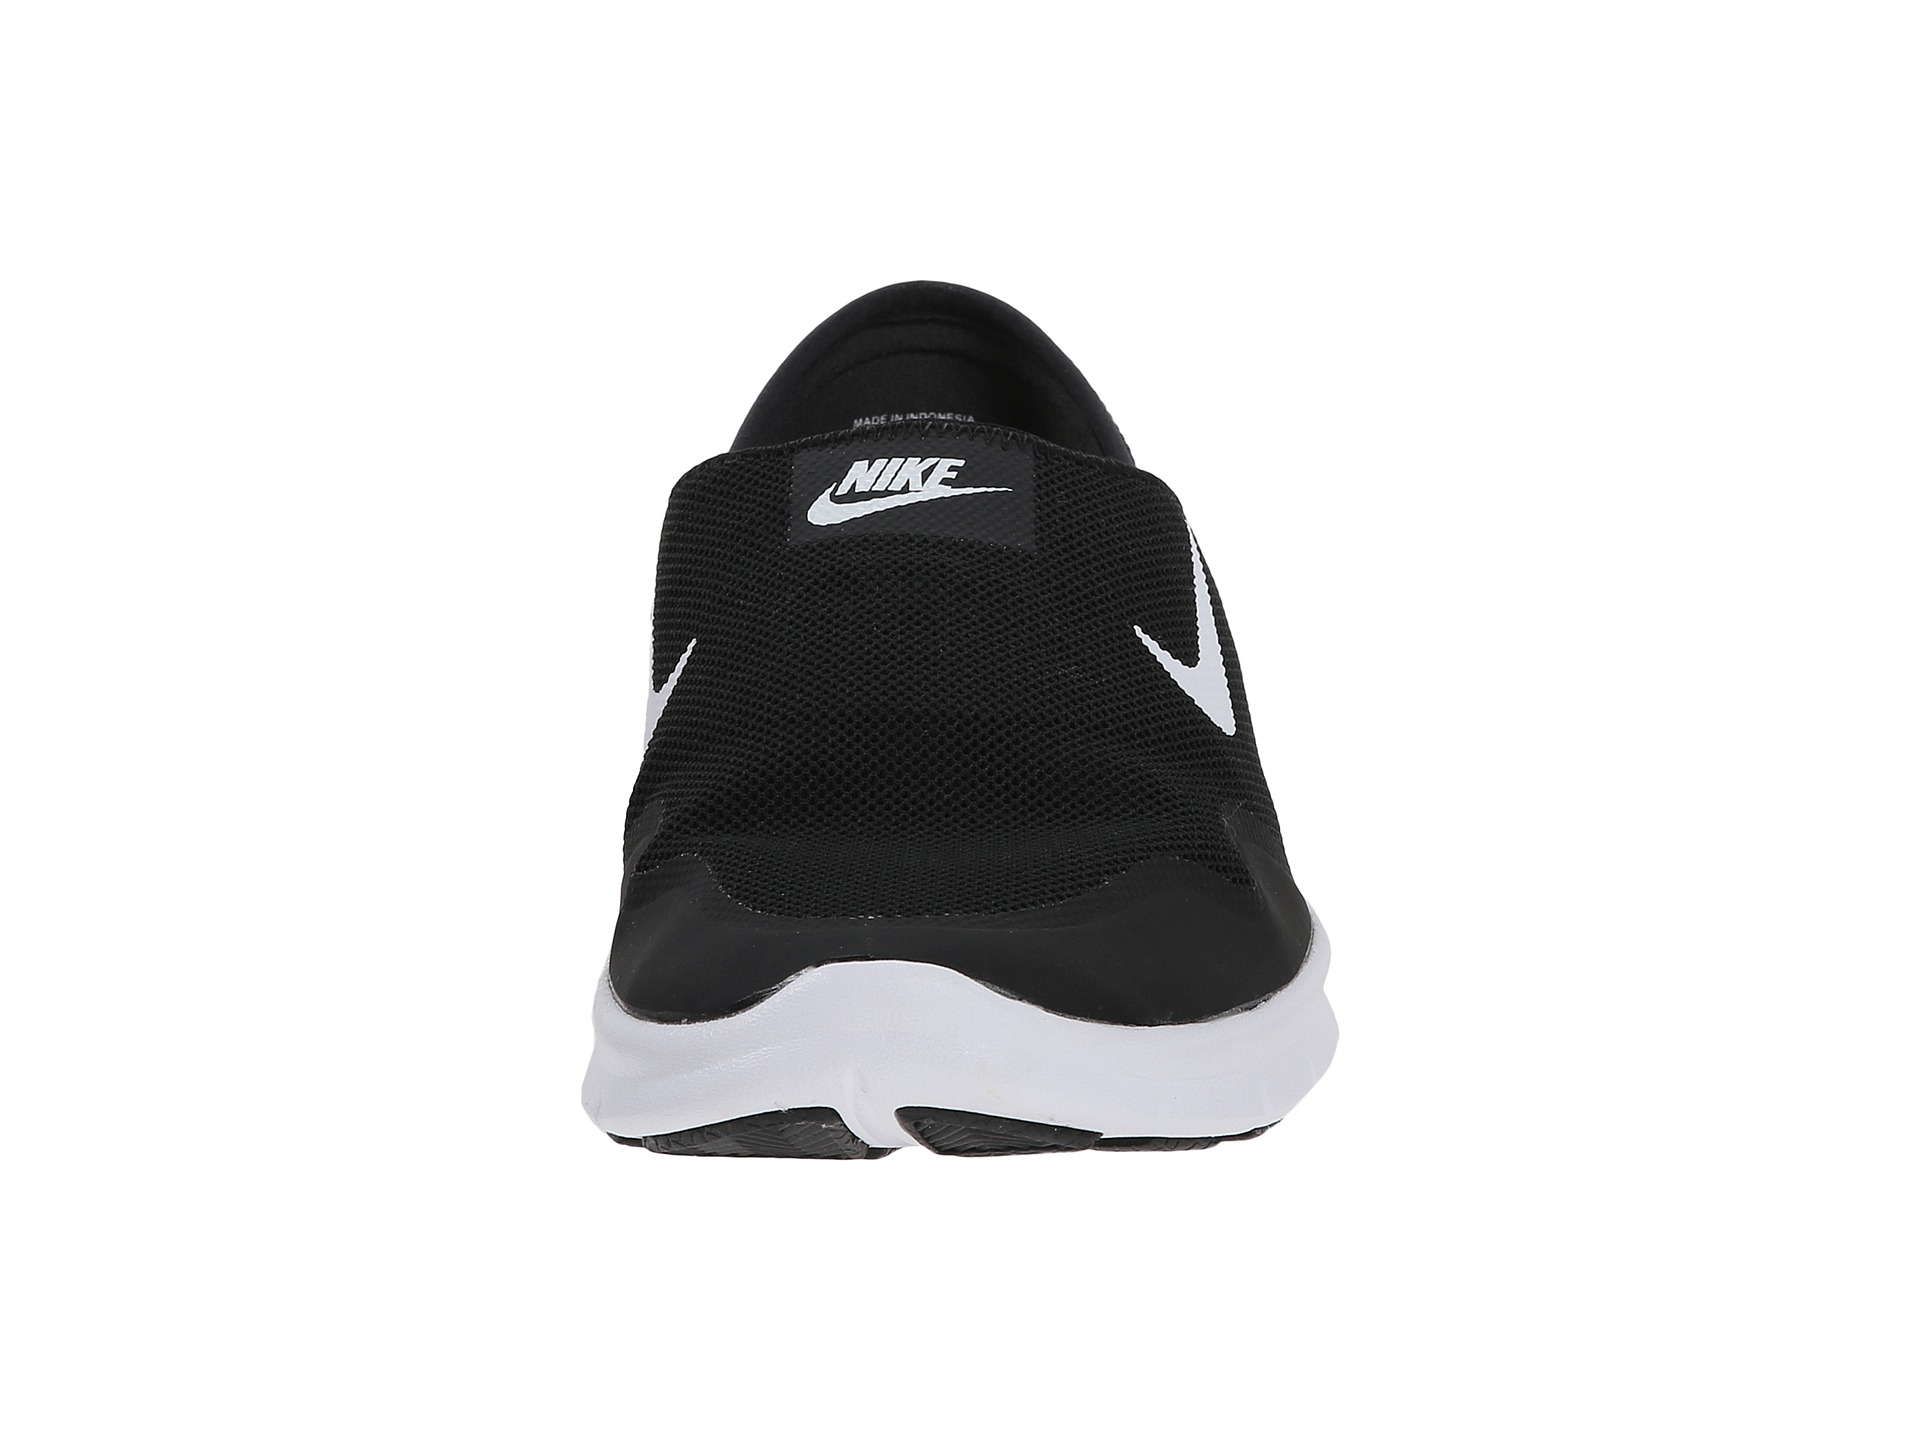 Nike Synthetic Orive Lite Slip-on in Black/White (Black) - Lyst